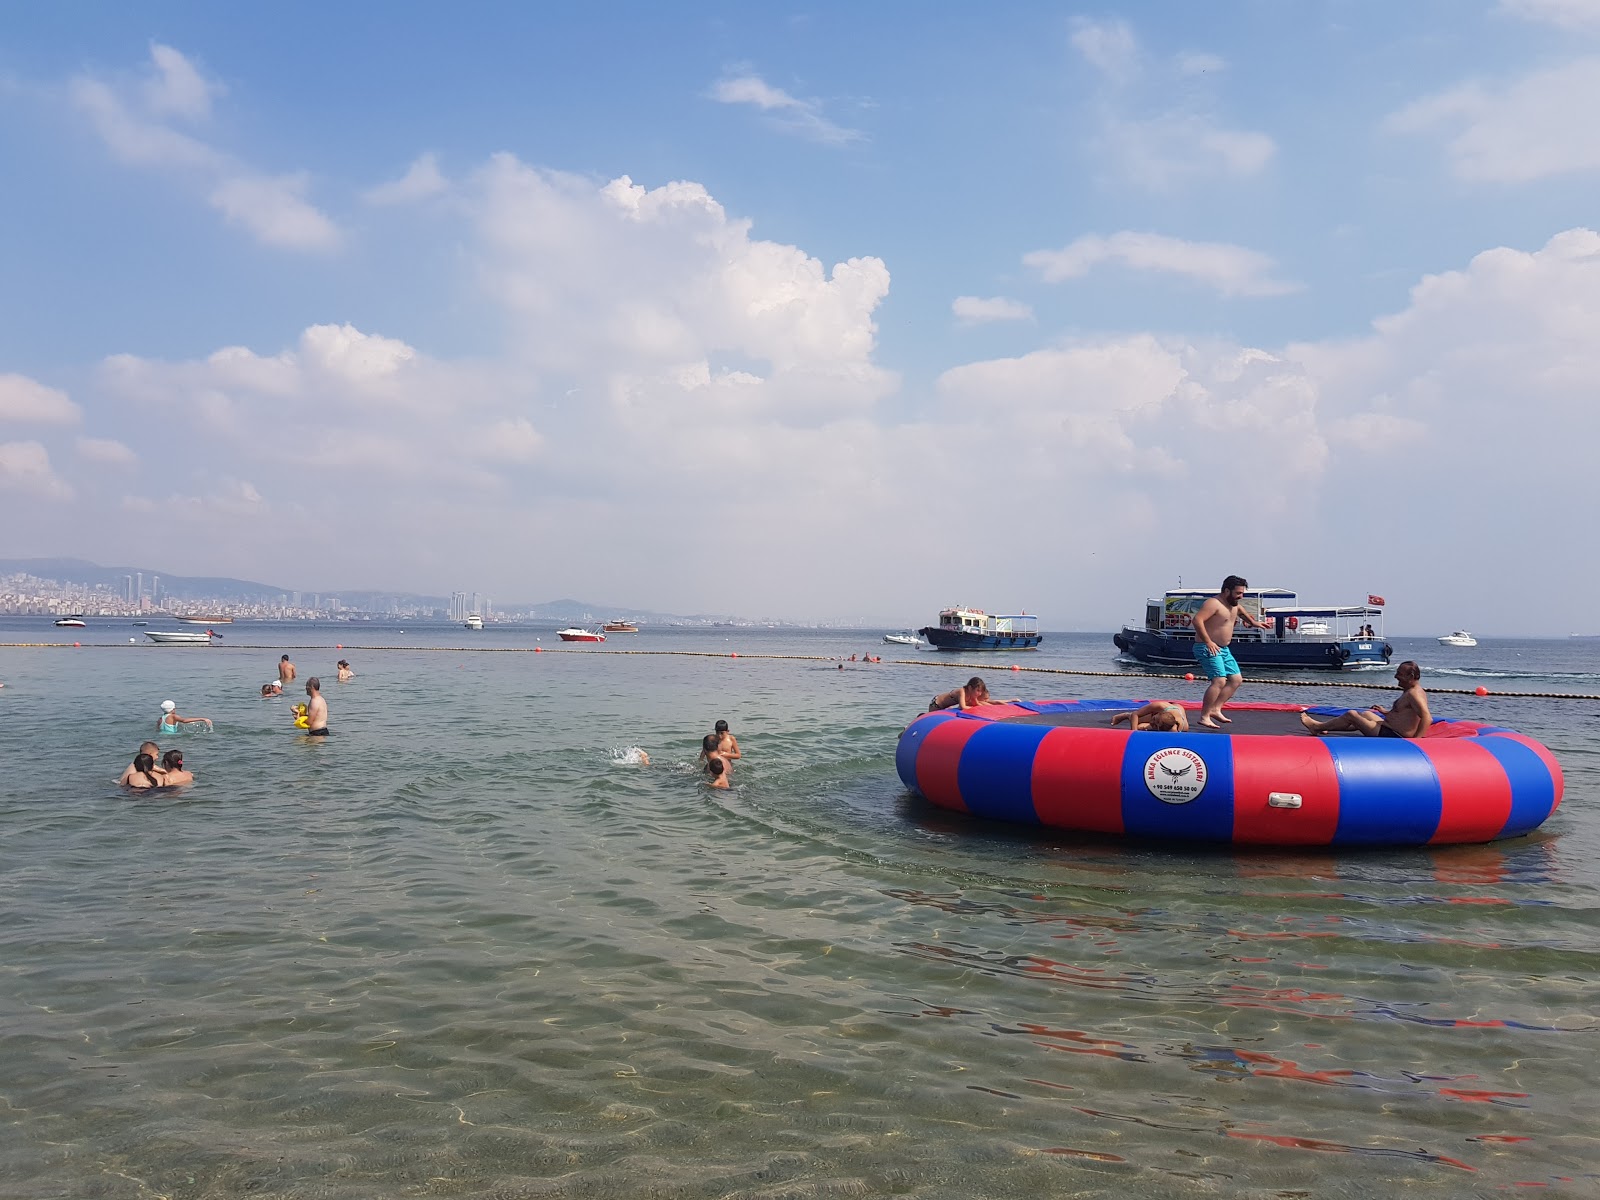 Photo of Nakibey Aile Plaj Tesisleri - popular place among relax connoisseurs